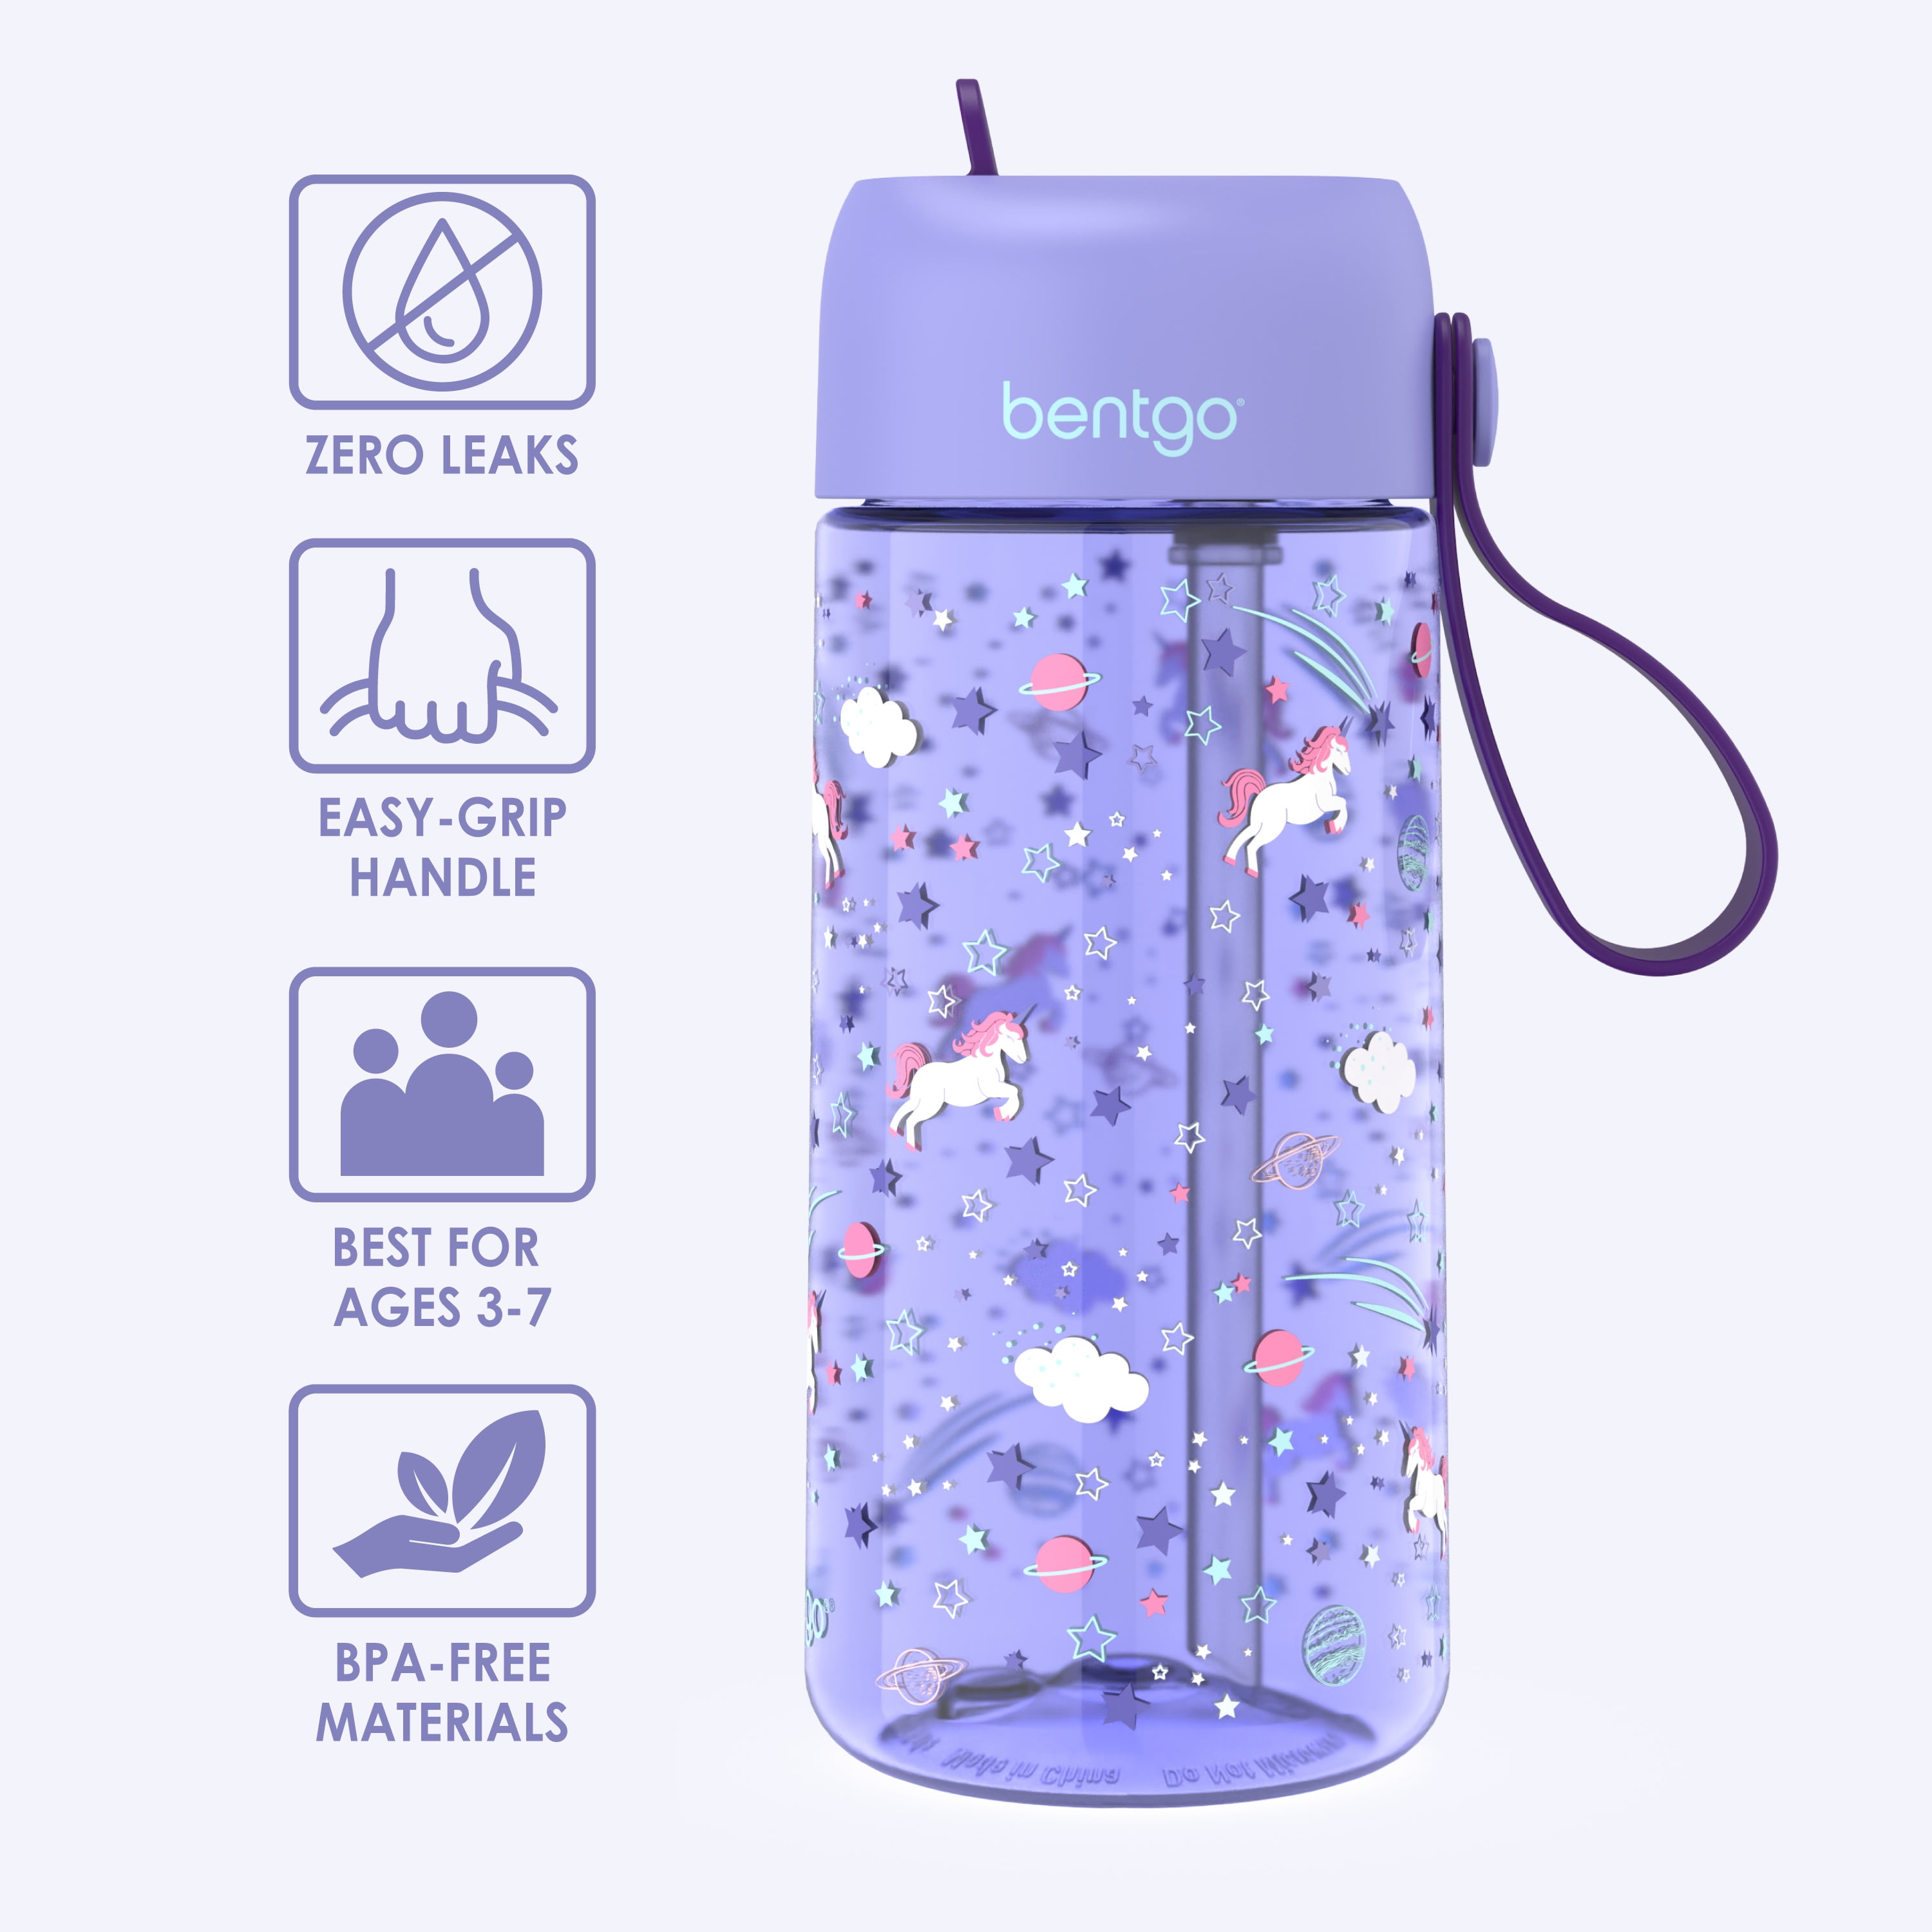 Bentgo Kids Prints Lunch Boxes & Water Bottles Unicorn/Galaxy